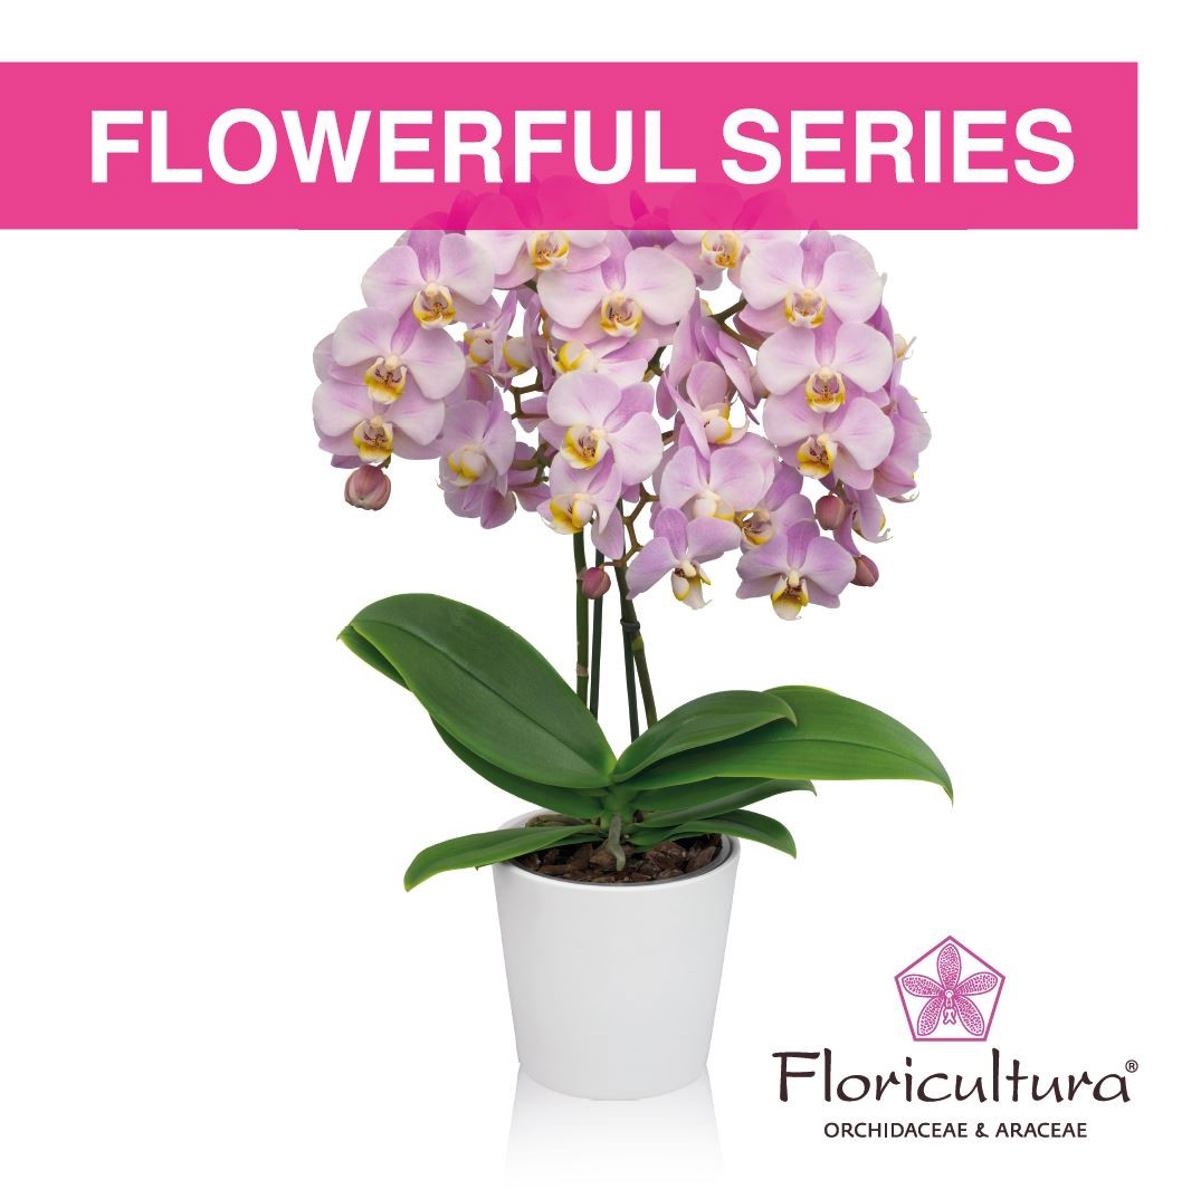 Floricultura introduces the Phalaenopsis Flowerful series